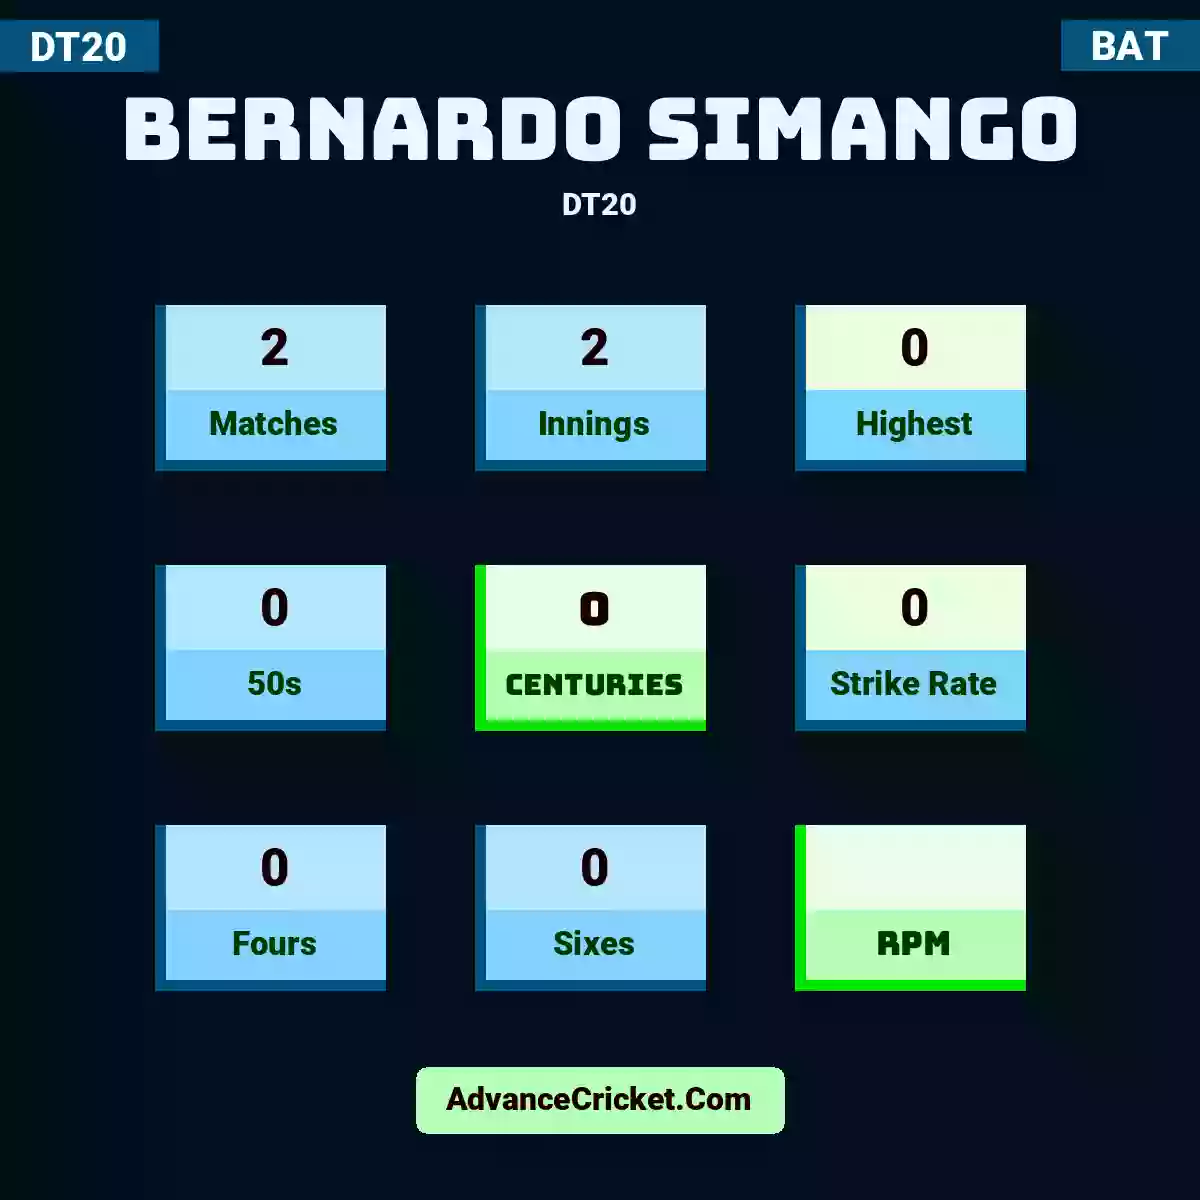 Bernardo Simango DT20 , Bernardo Simango played 2 matches, scored 0 runs as highest, 0 half-centuries, and 0 centuries, with a strike rate of 0. B.Simango hit 0 fours and 0 sixes.